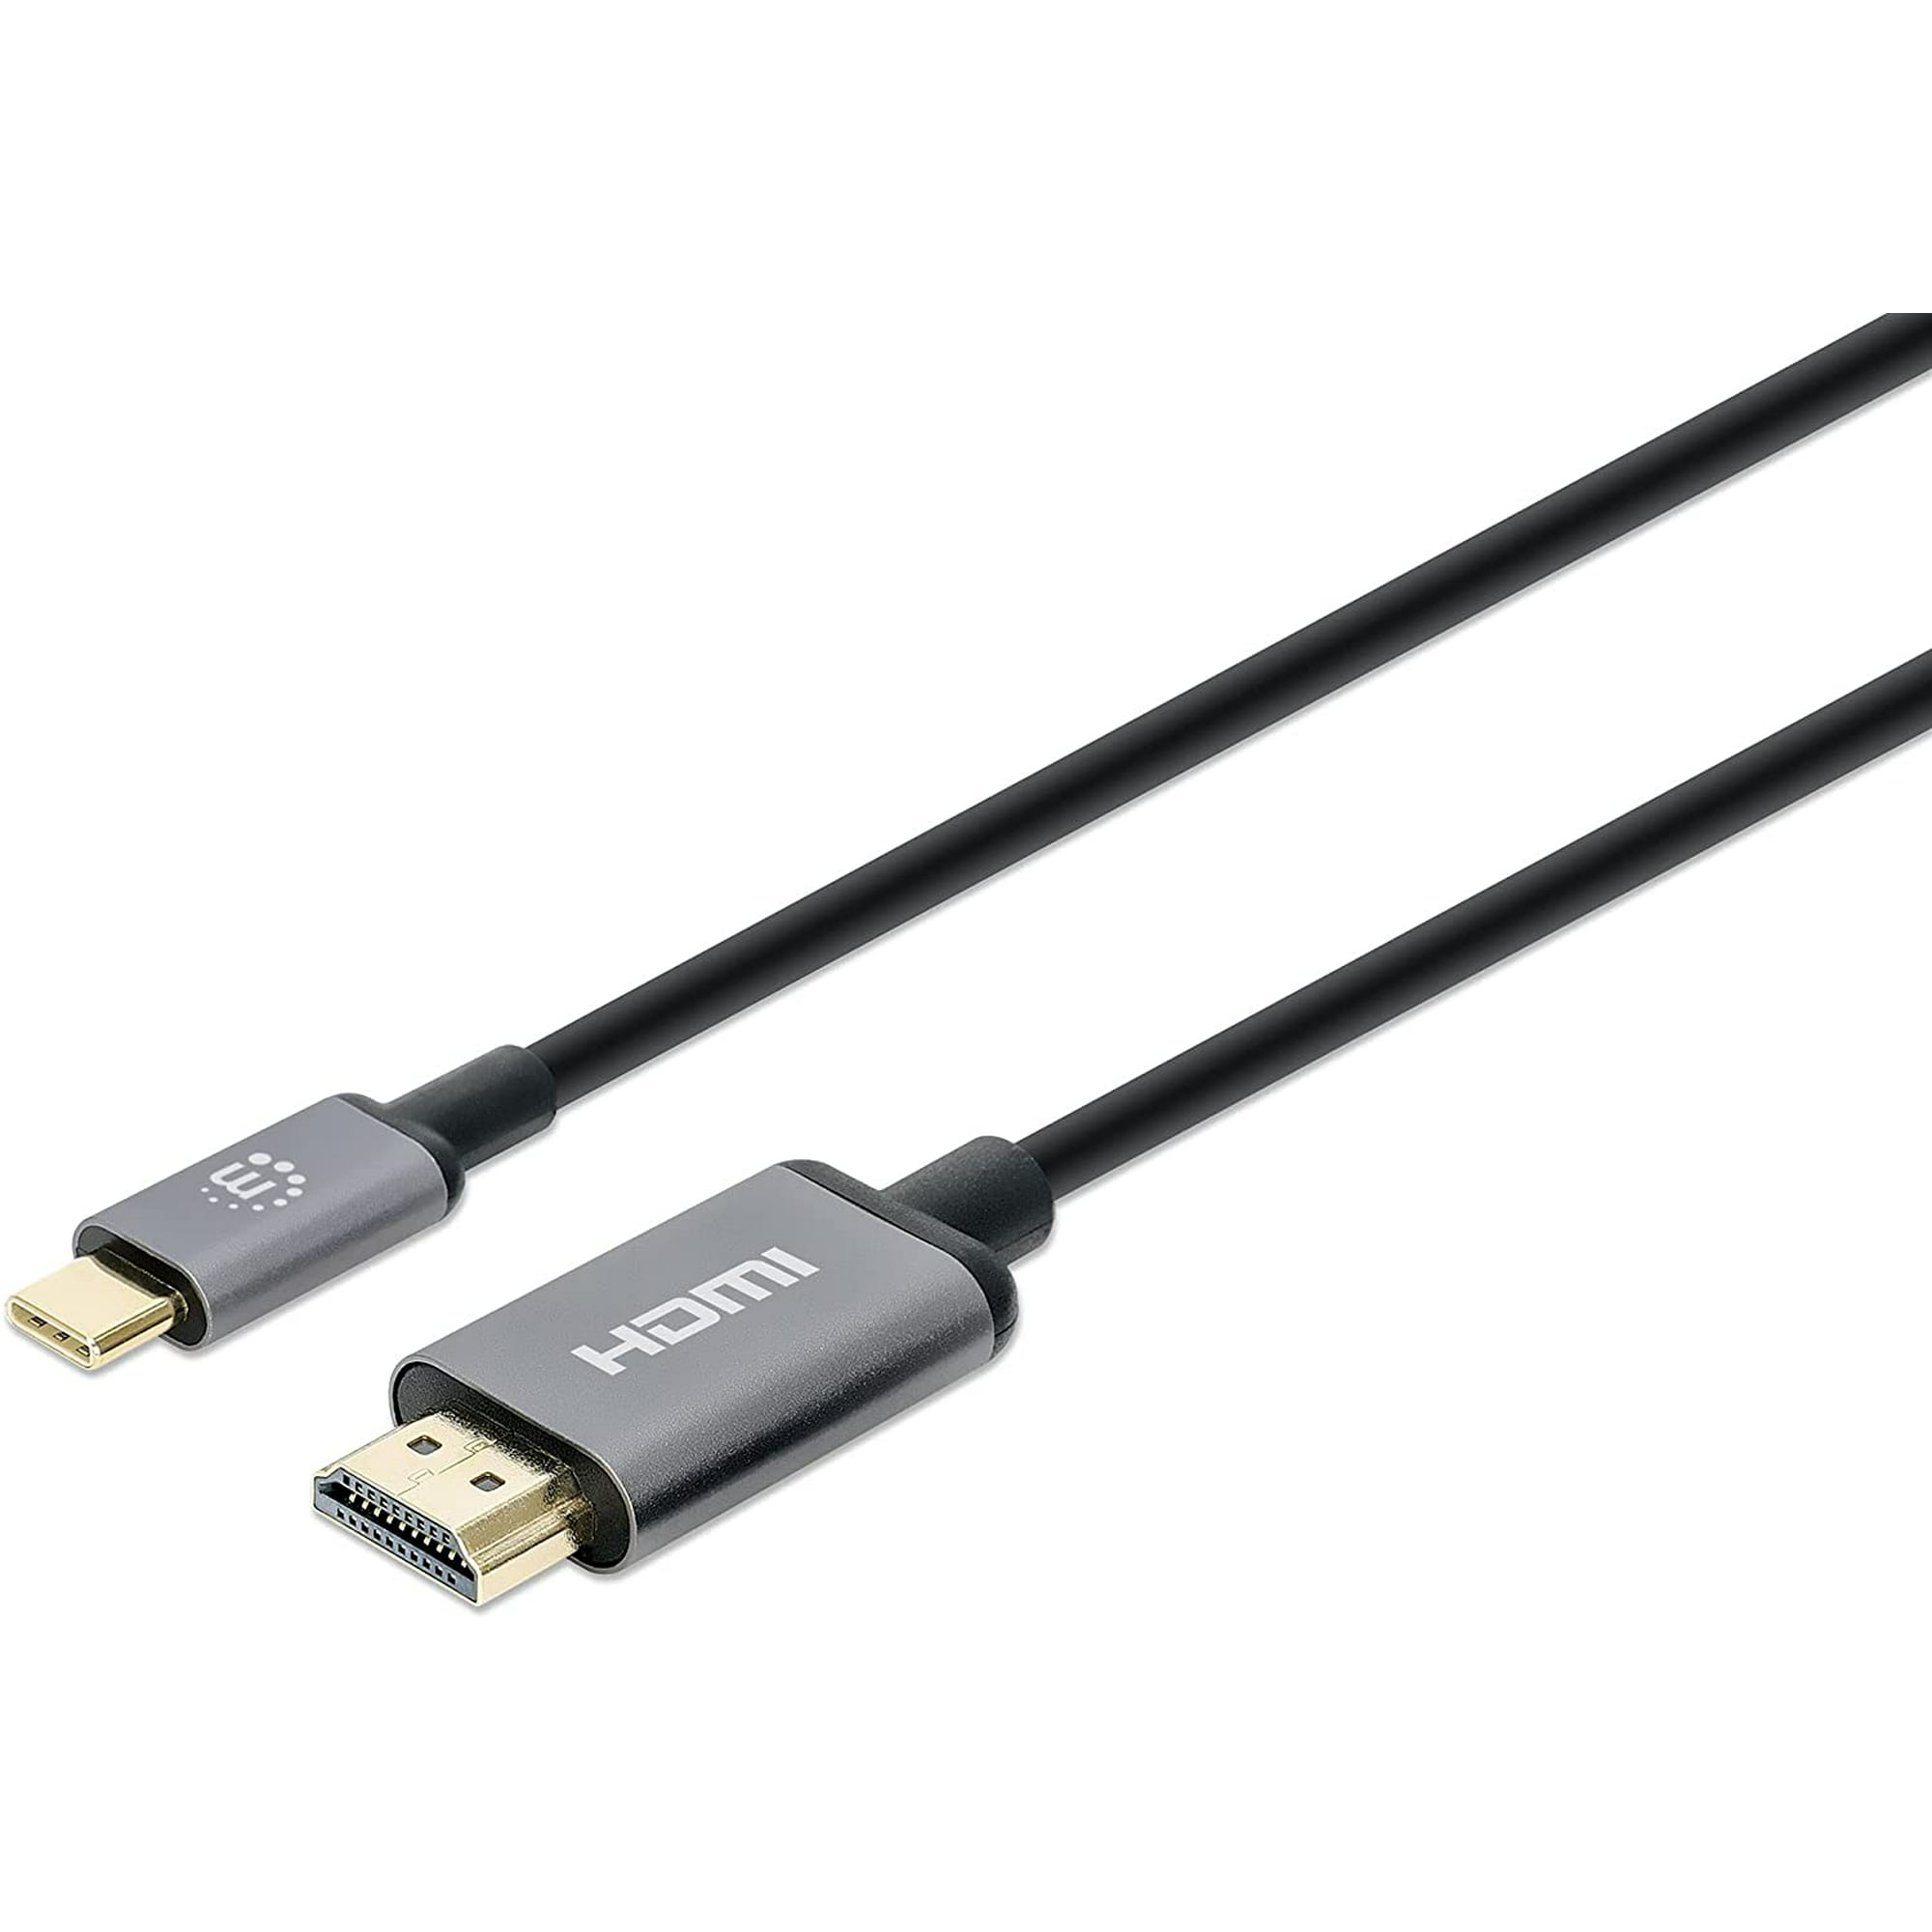 Basics Adaptador USB-C 3.1 macho a HDMI hembra (4K @60Hz), gris,  1.69 x 1.45 x 0.43 pulgadas